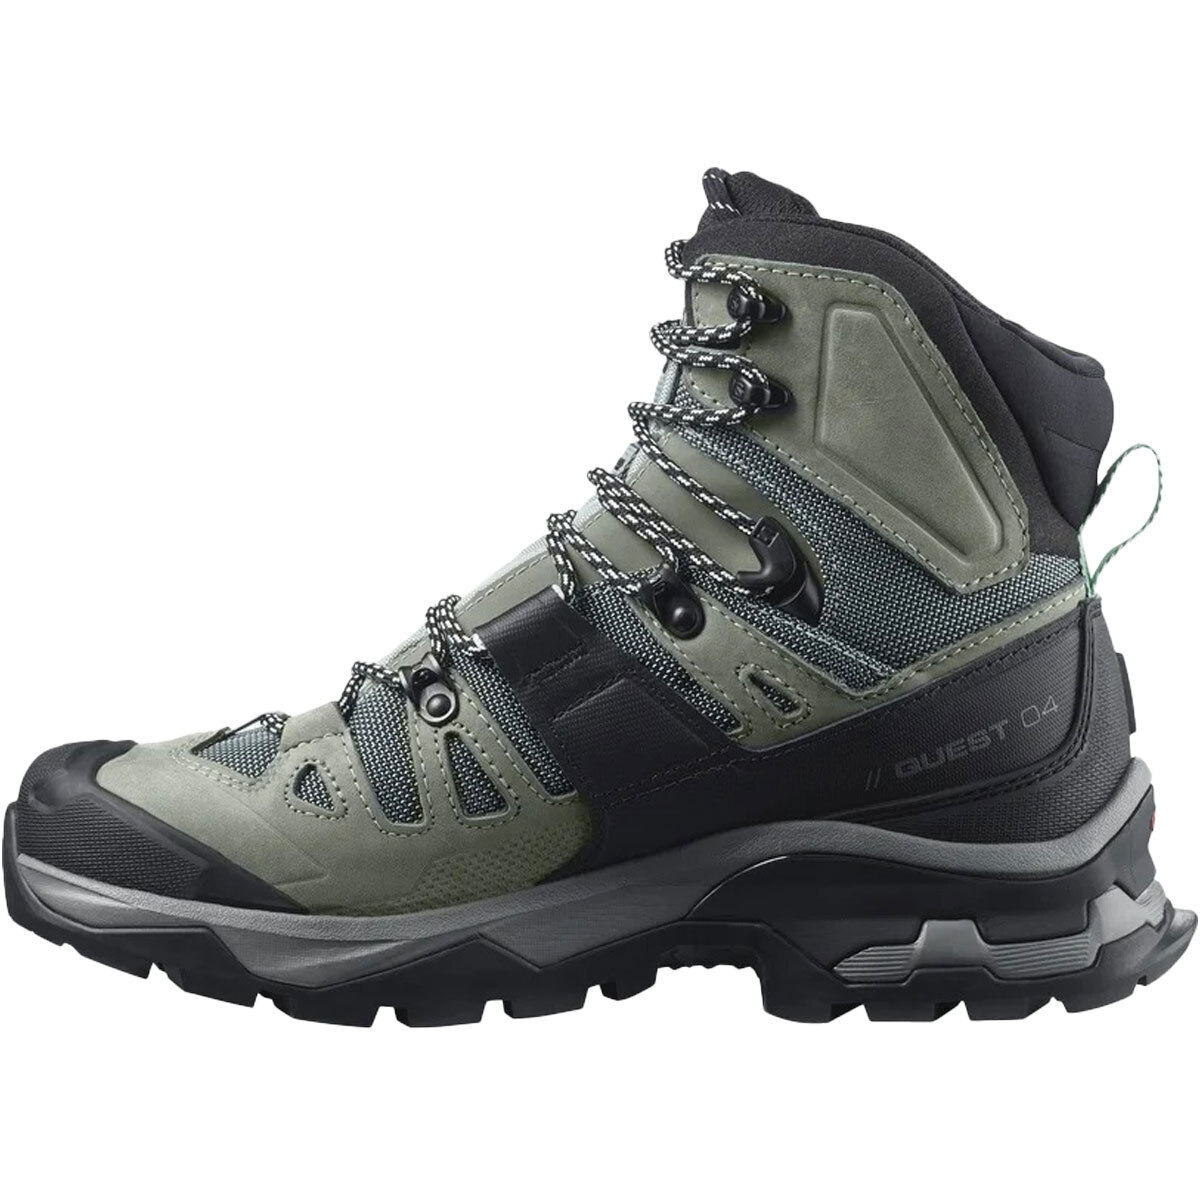 Salomon Women's Quest 4 GORE-TEX High Hiking Boots | Sportsman's Warehouse